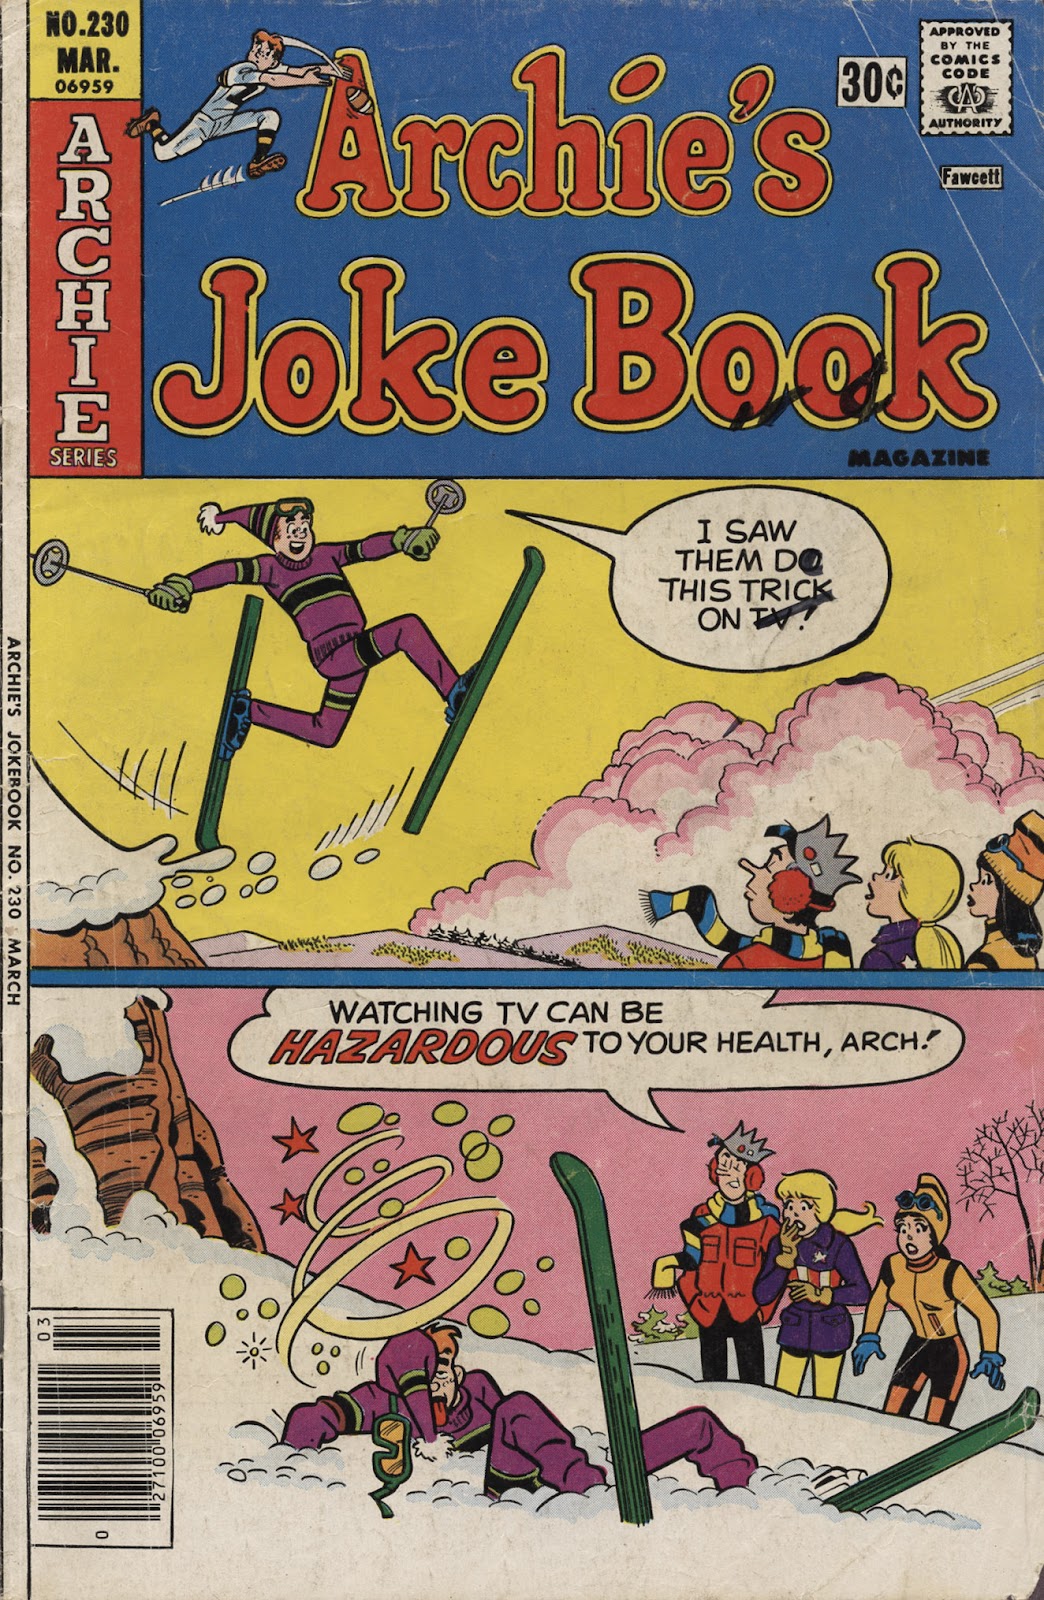 Archie's Joke Book Magazine issue 230 - Page 1